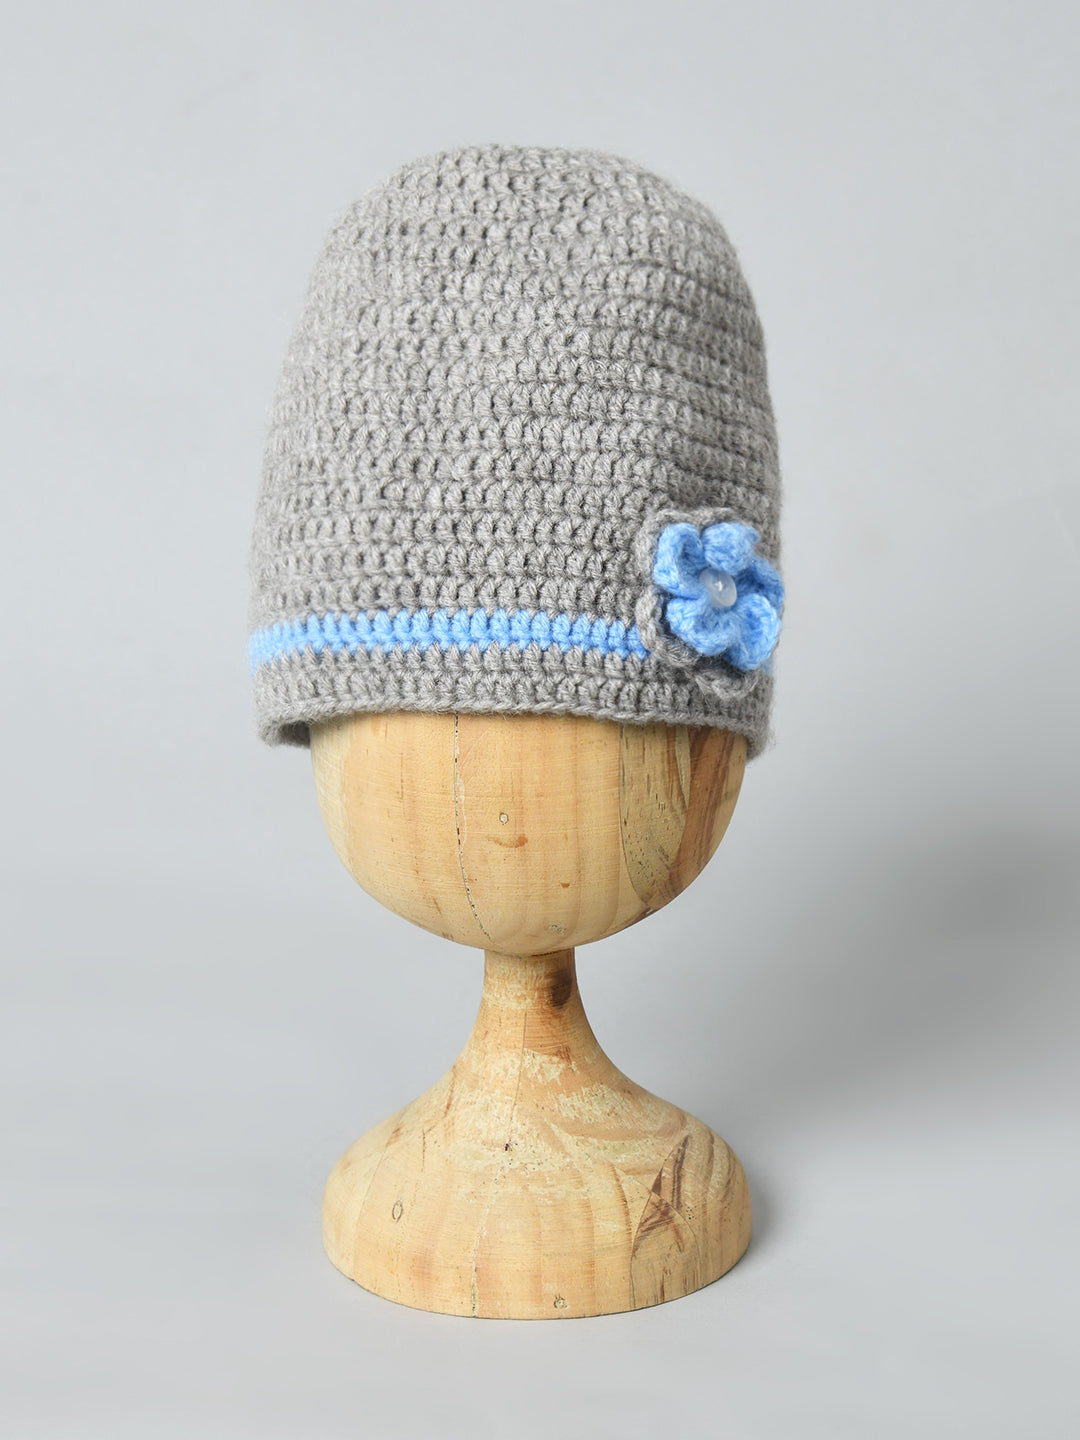 Grey & Blue Handmade Woollen Cap with Flower